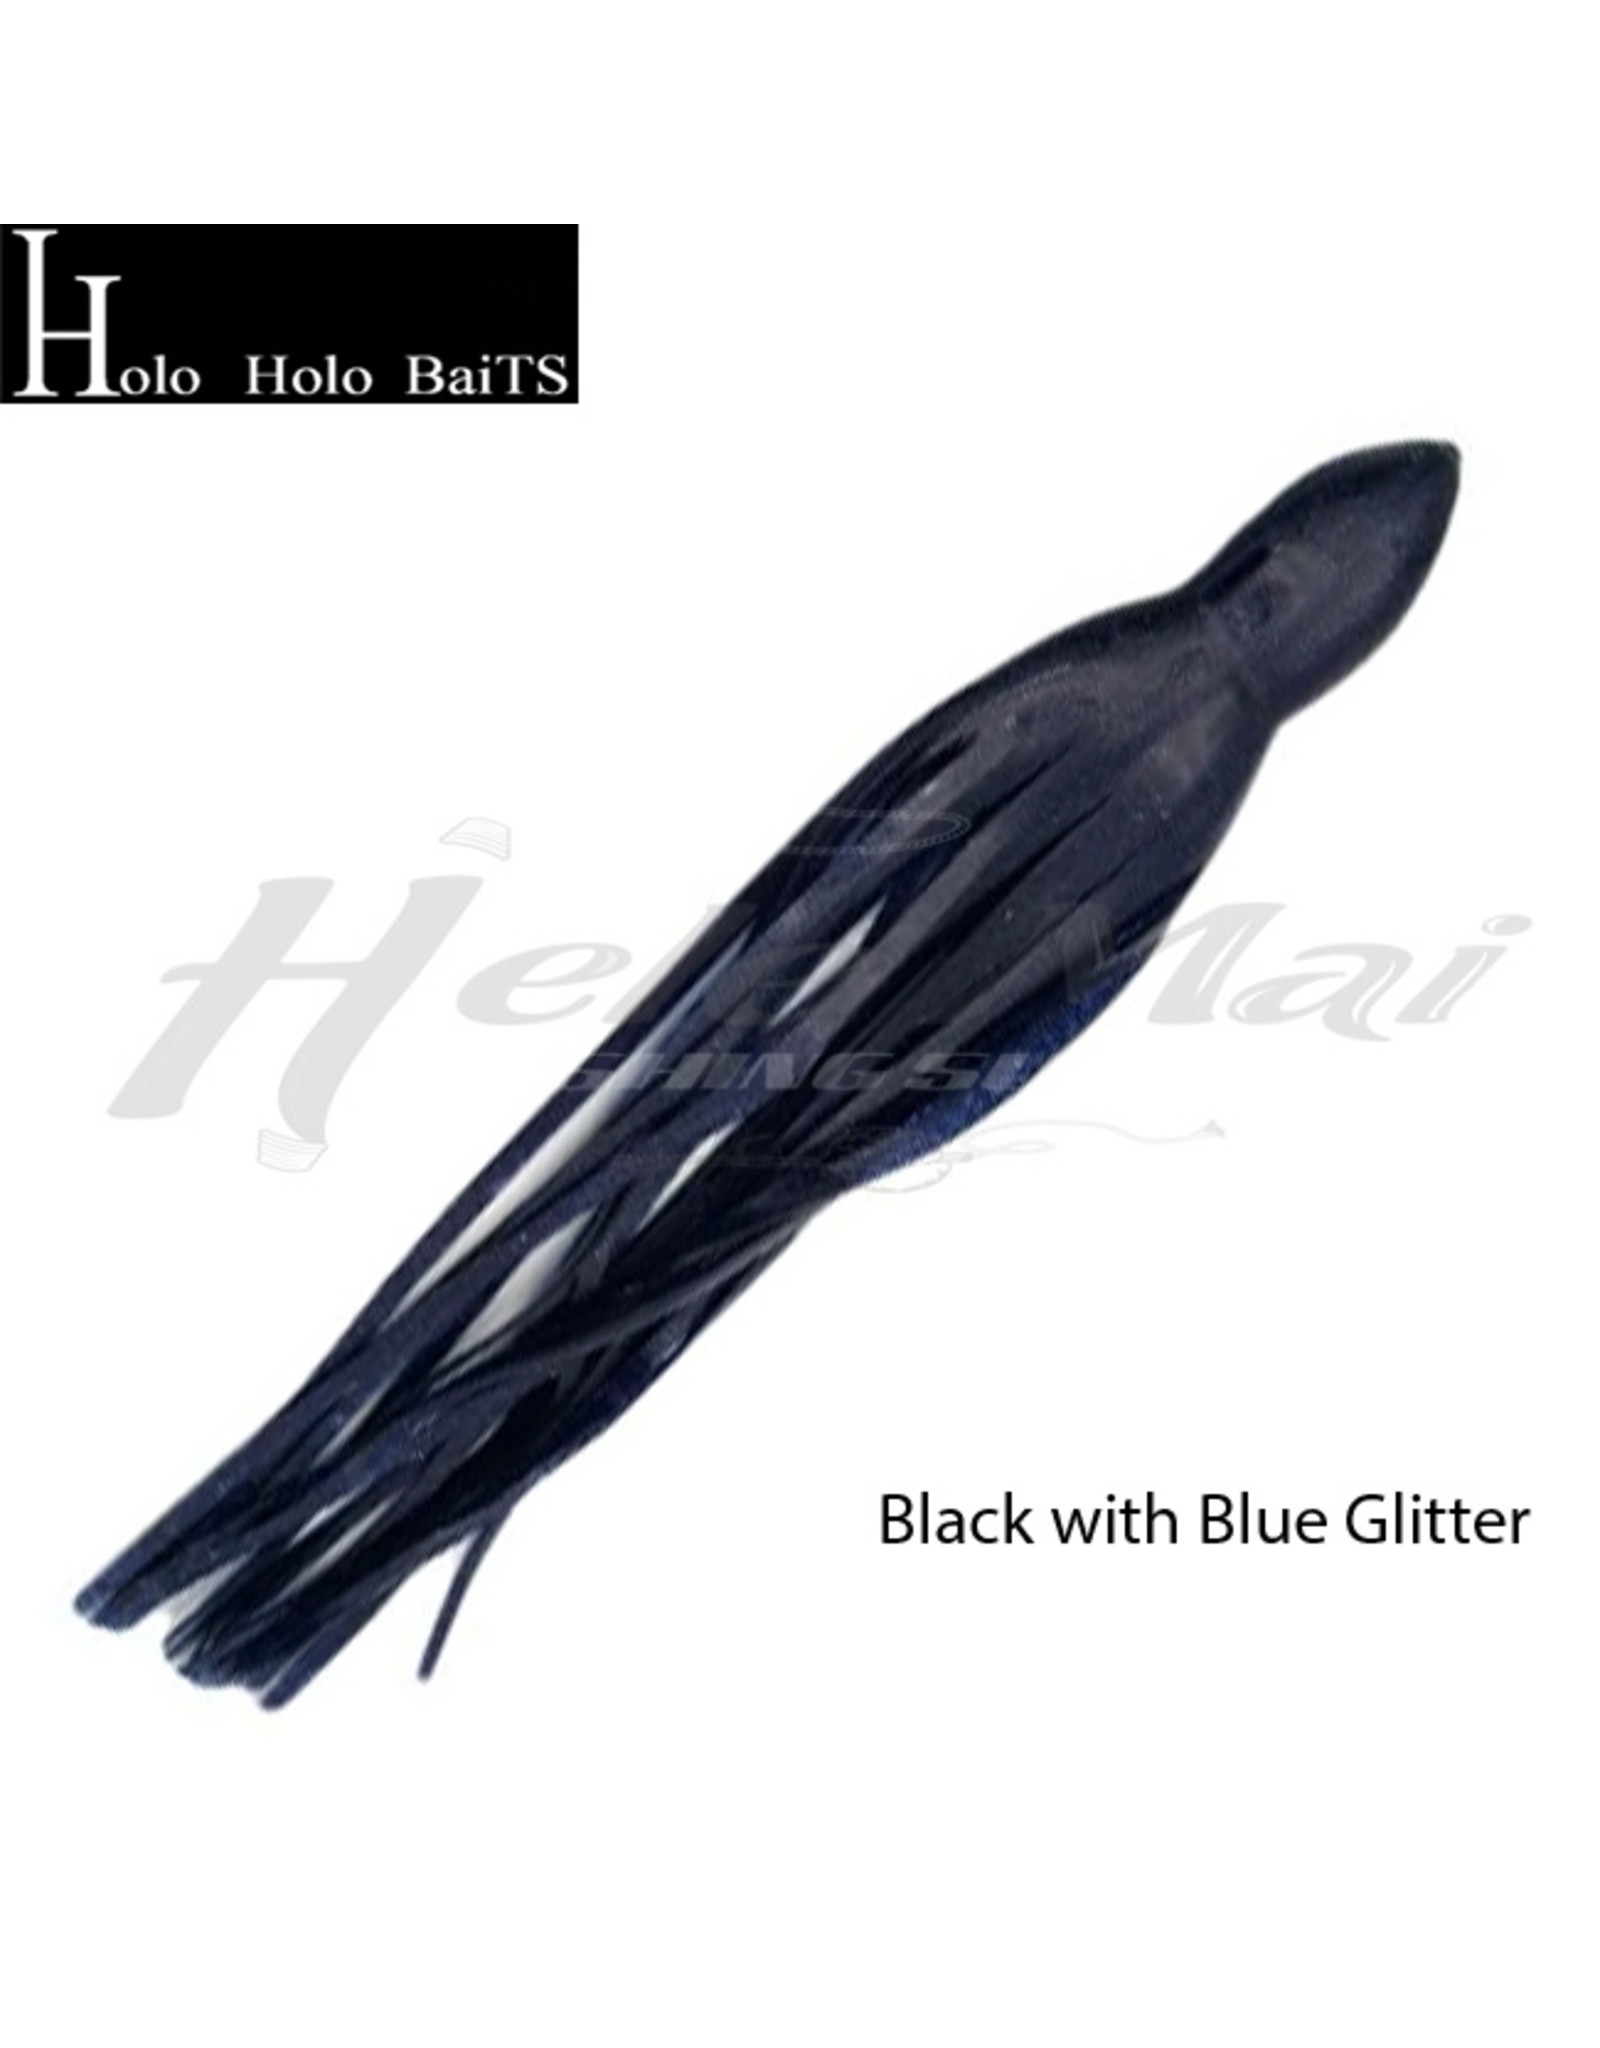 HOLO HOLO HAWAII (HHH) HH, 7" SQUID SKIRT BLACK BLUE GLITTER 1302